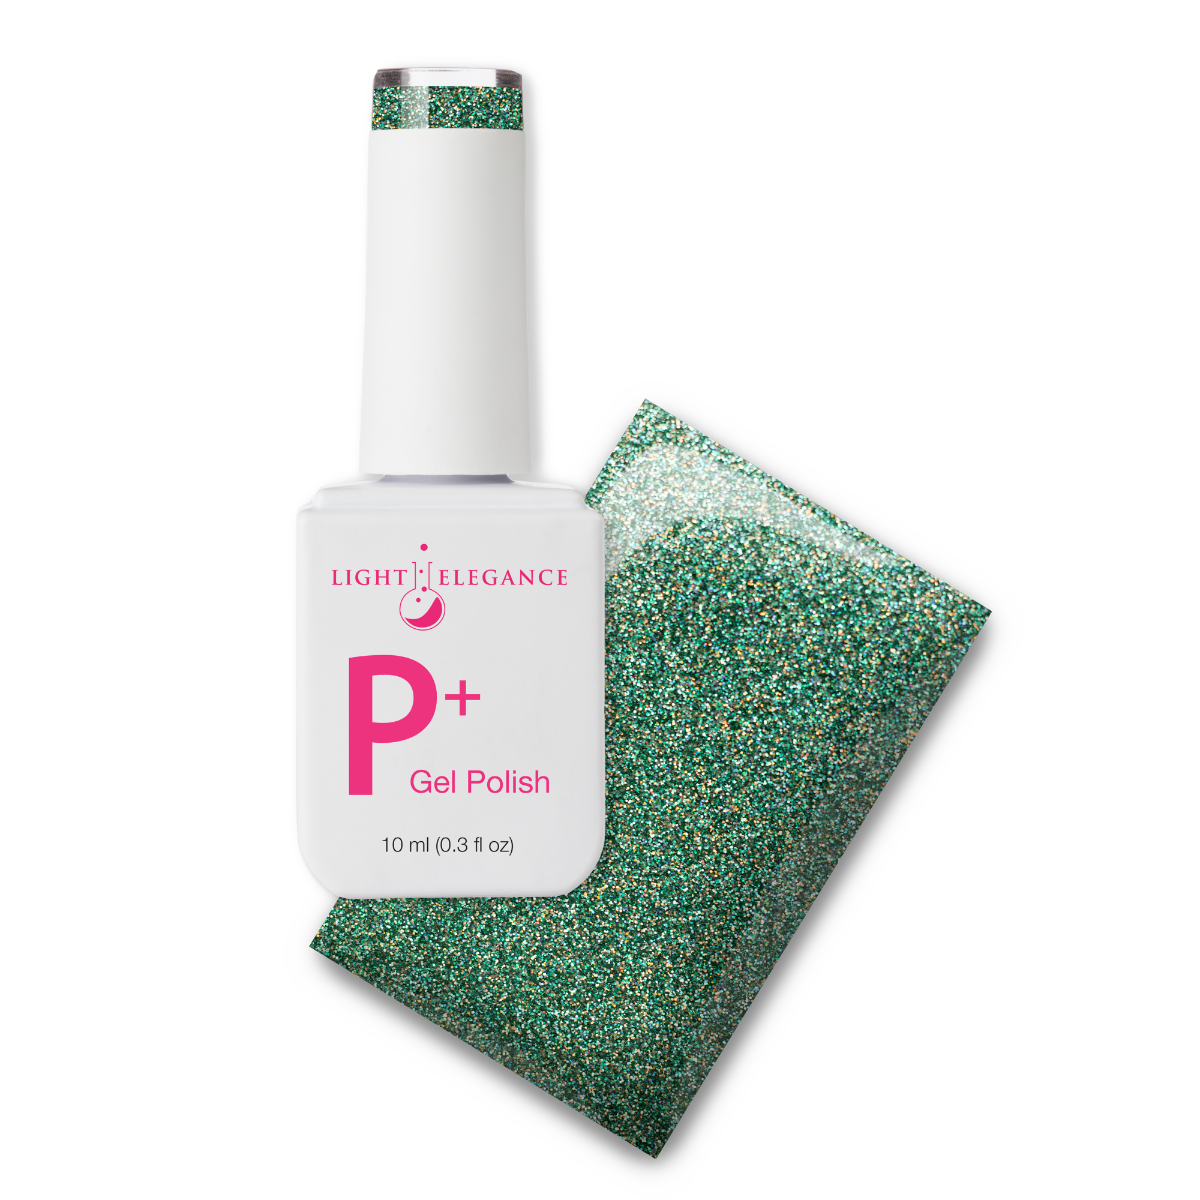 Light Elegance P+ Soak Off Glitter Gel - Bravo! :: New Packaging